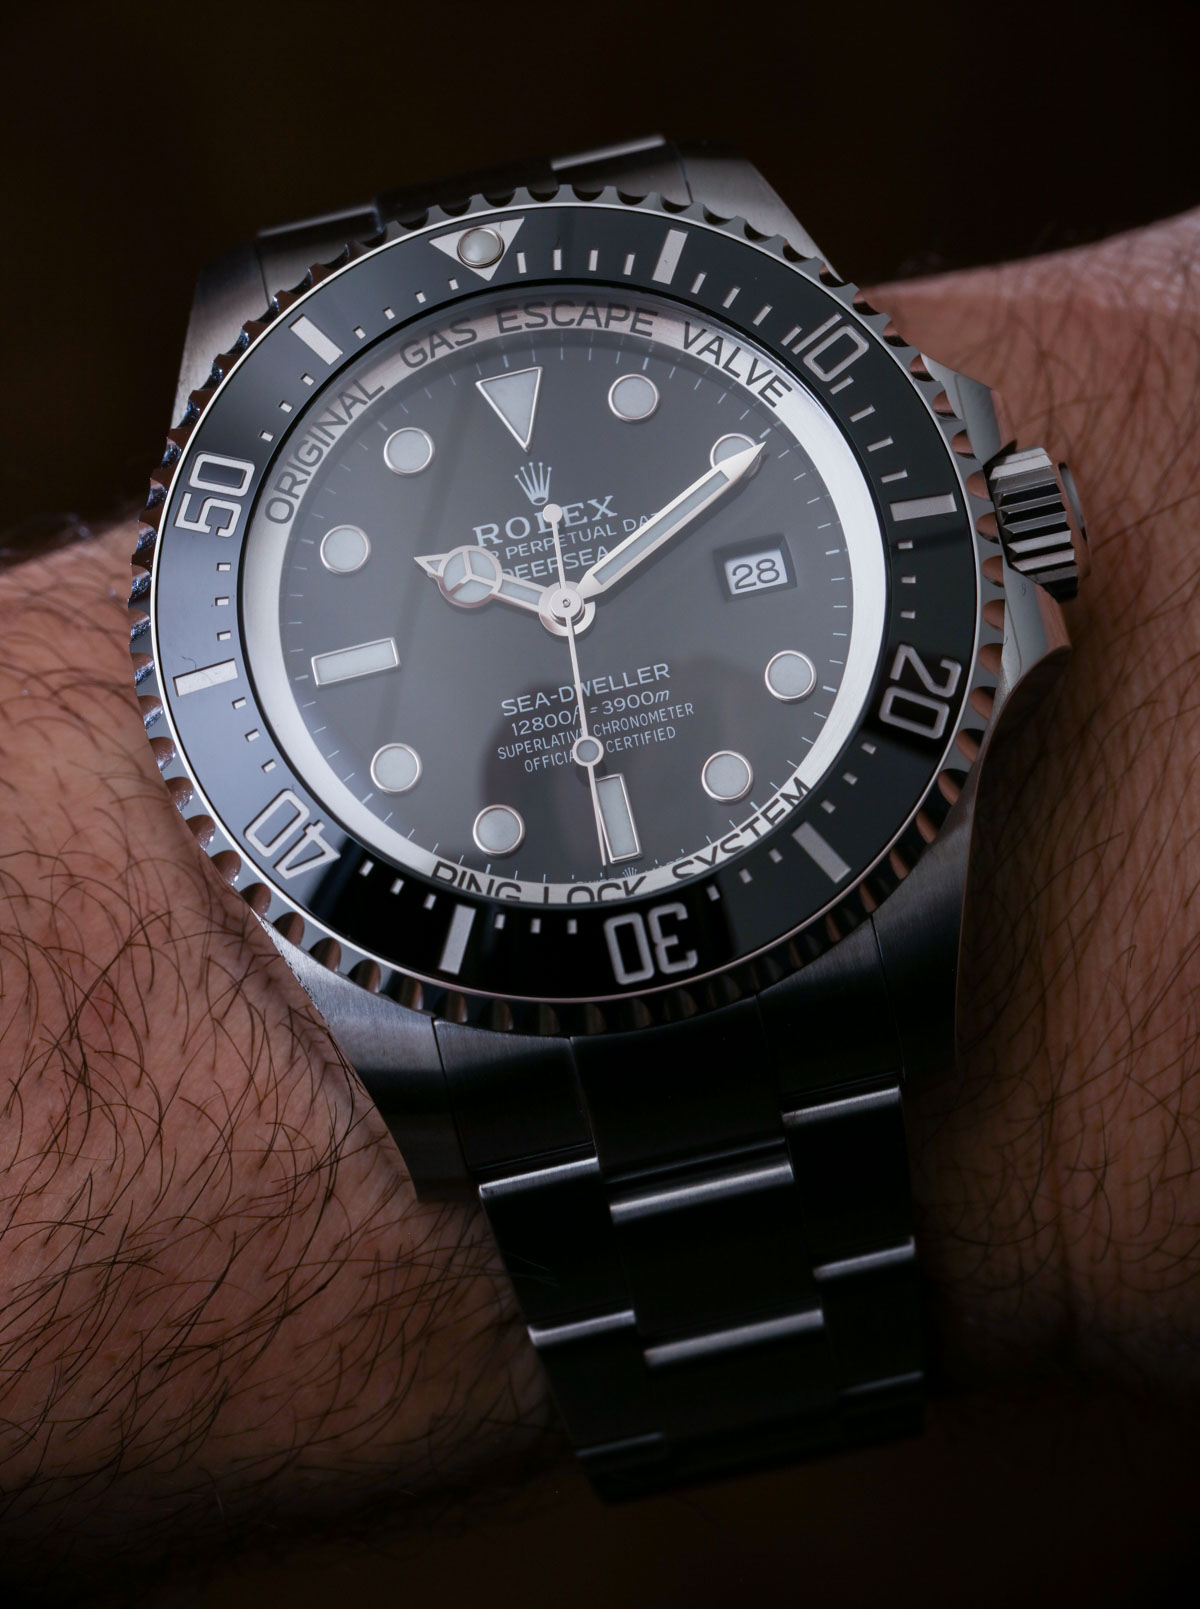 Rolex Deepsea Sea Dweller 126660 Black Dial Watch Hands On